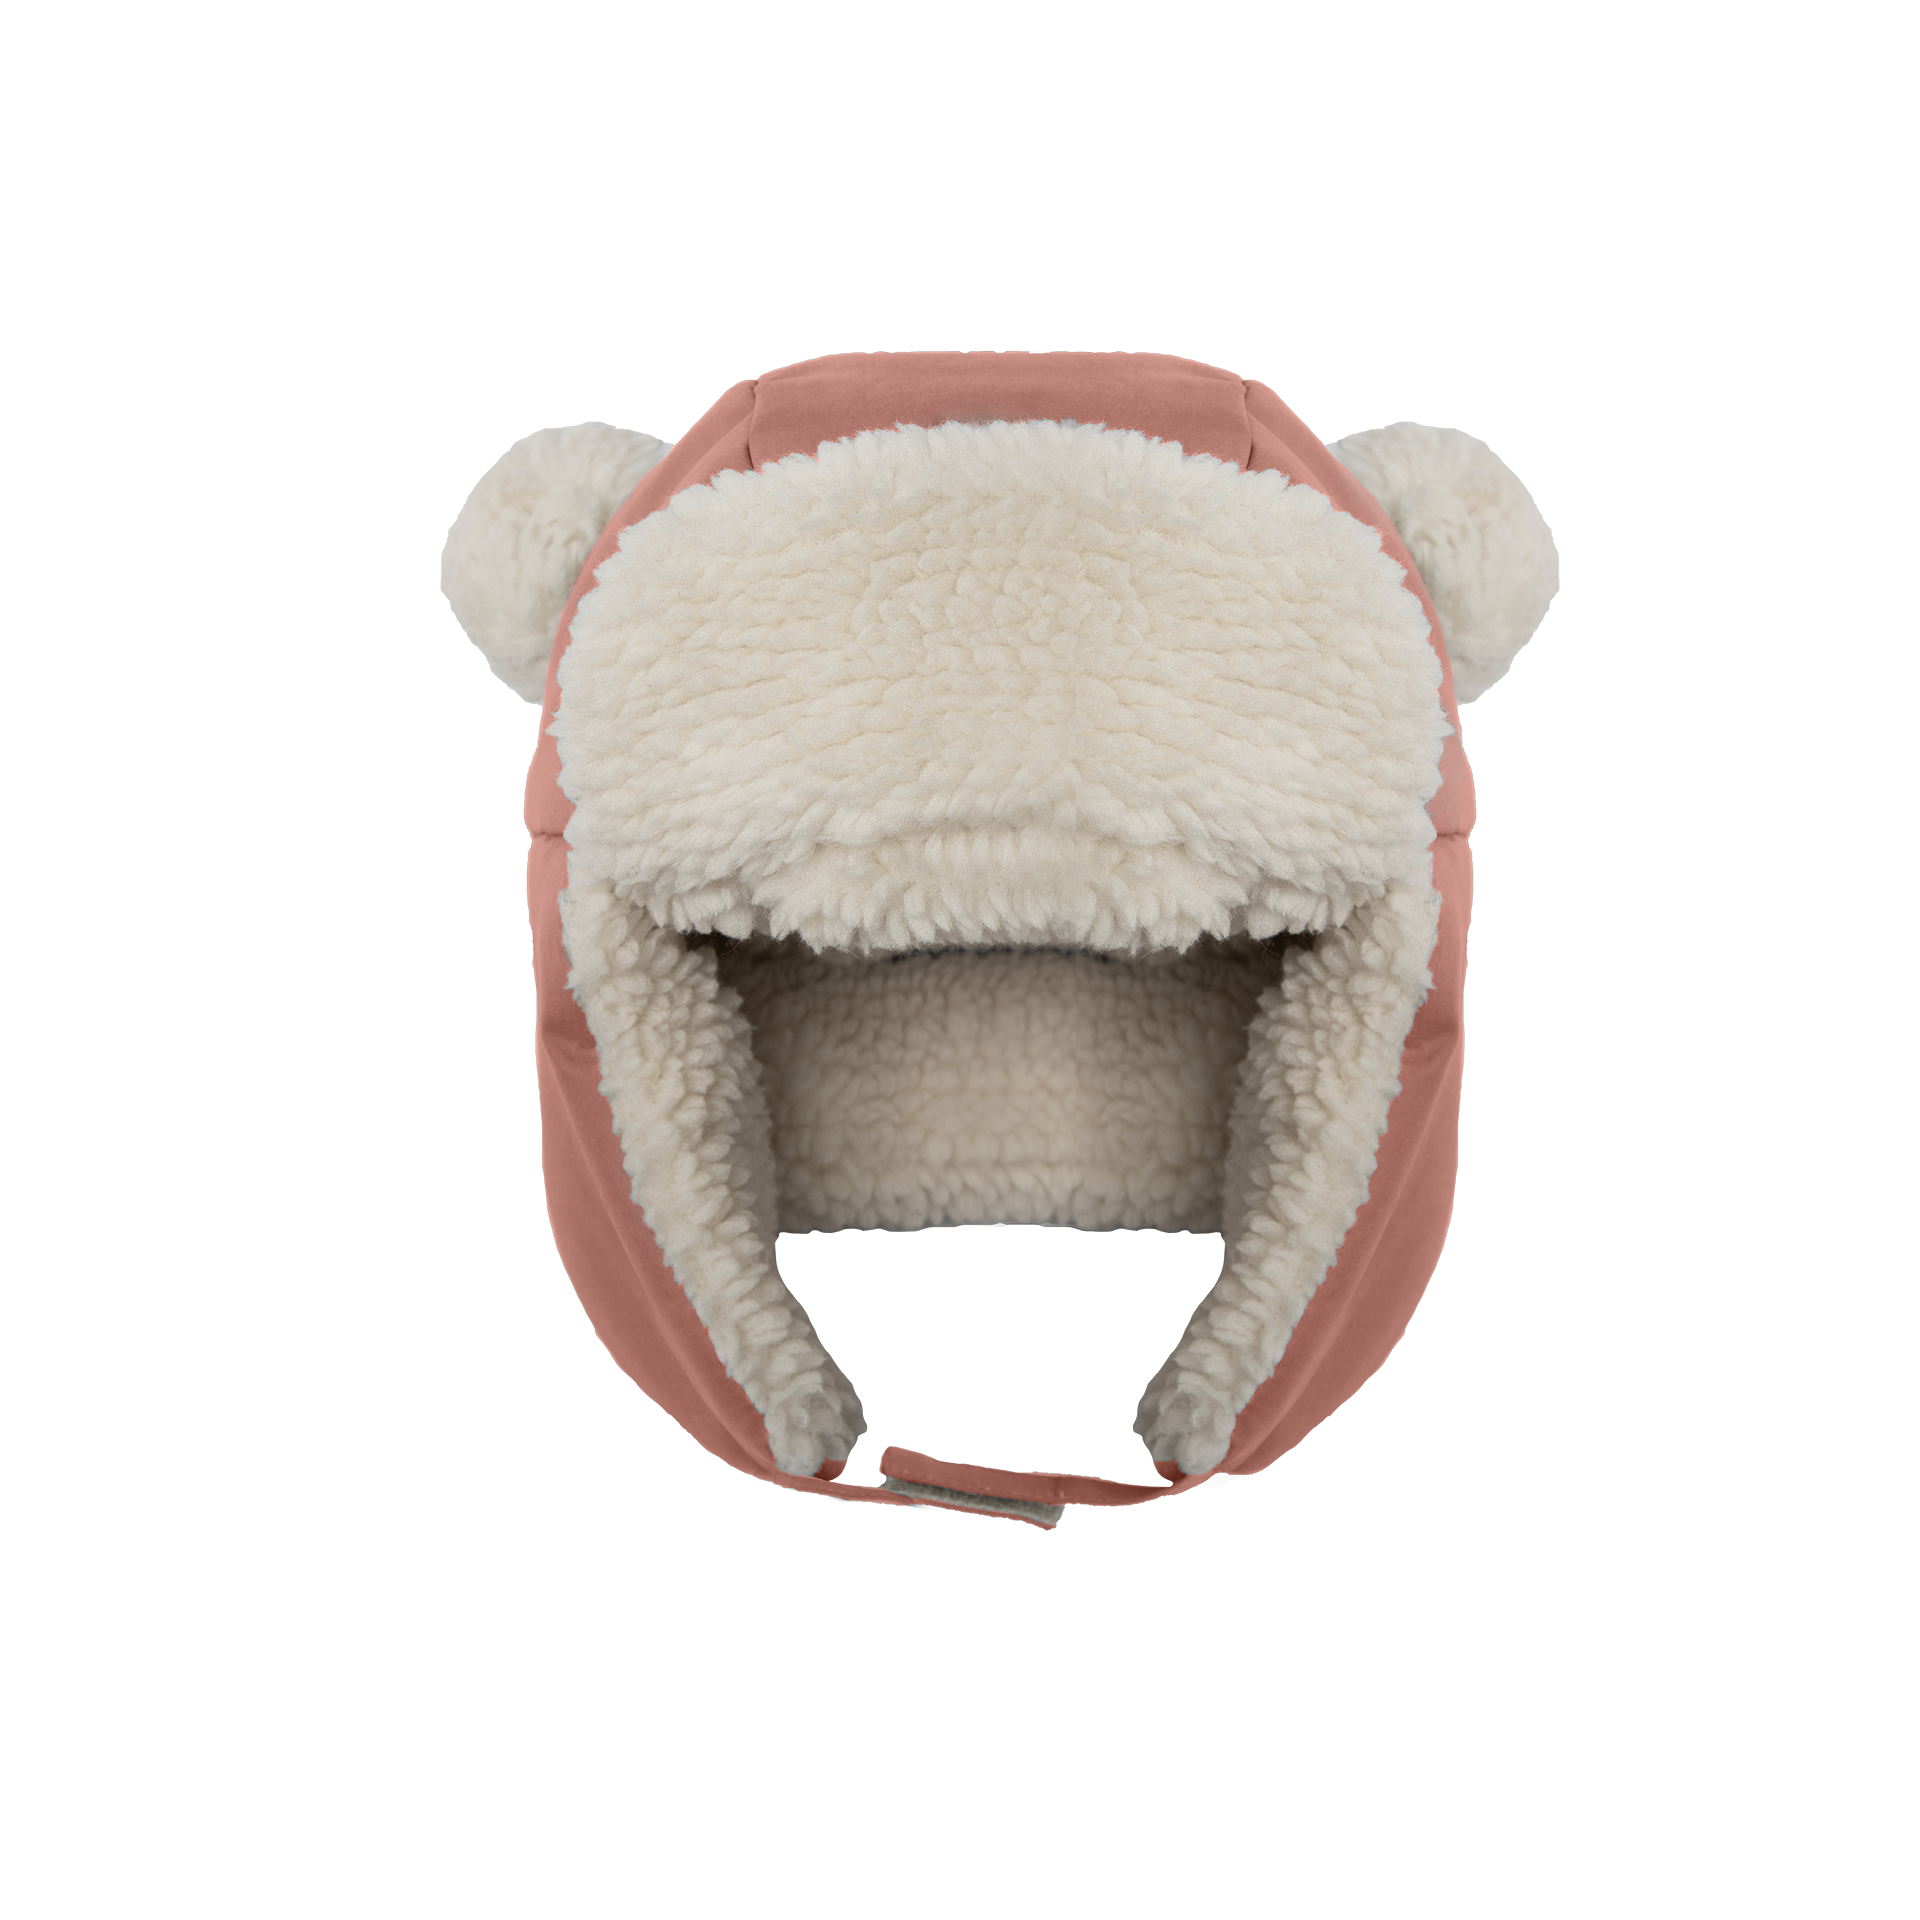 The Cub Hat - Benji